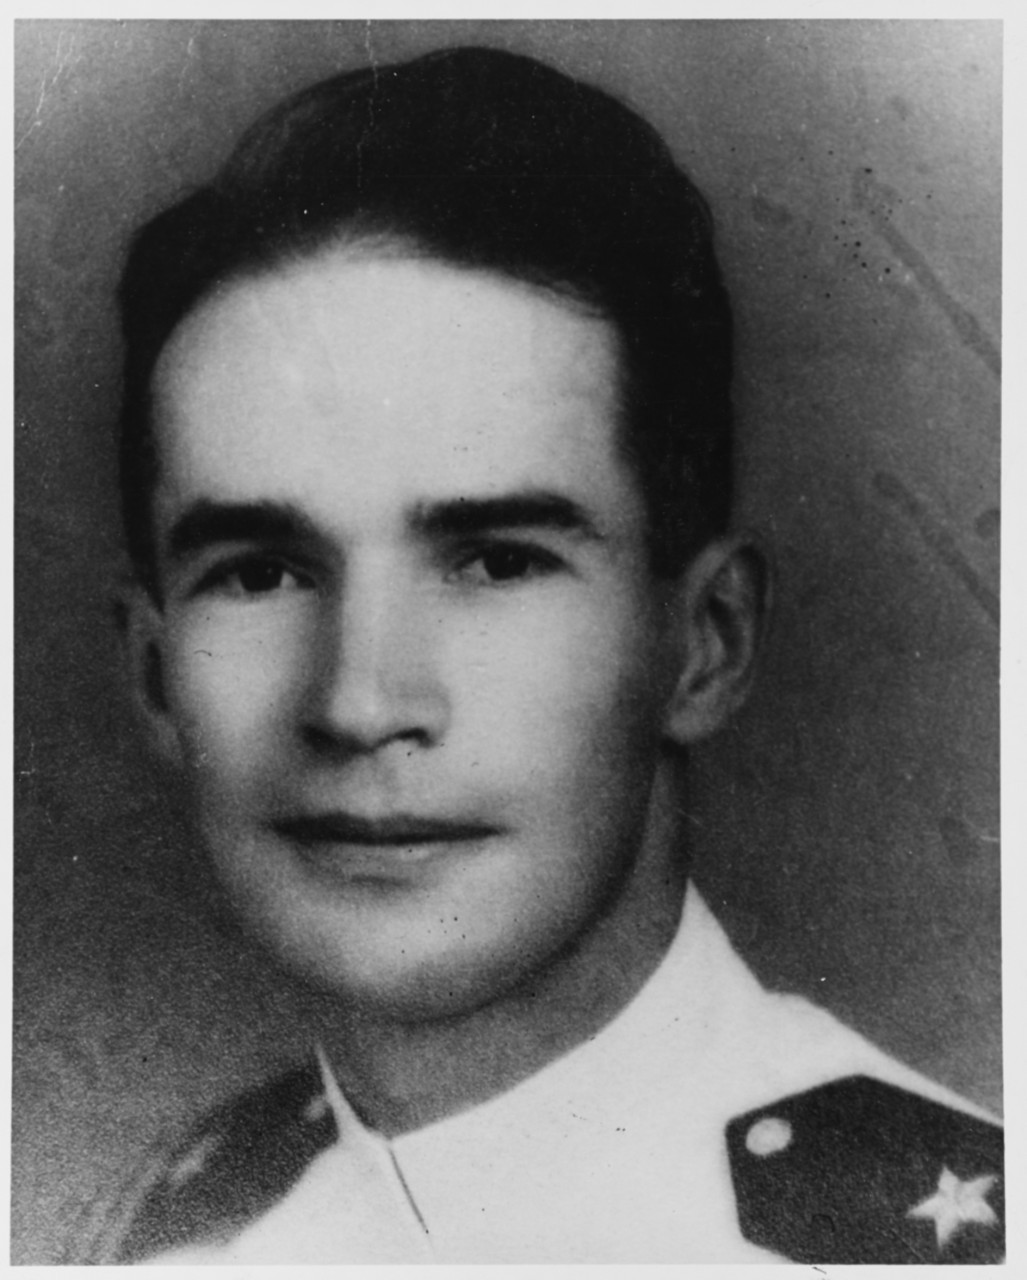 Lieutenant Commander Robert Marion Brinker, USN